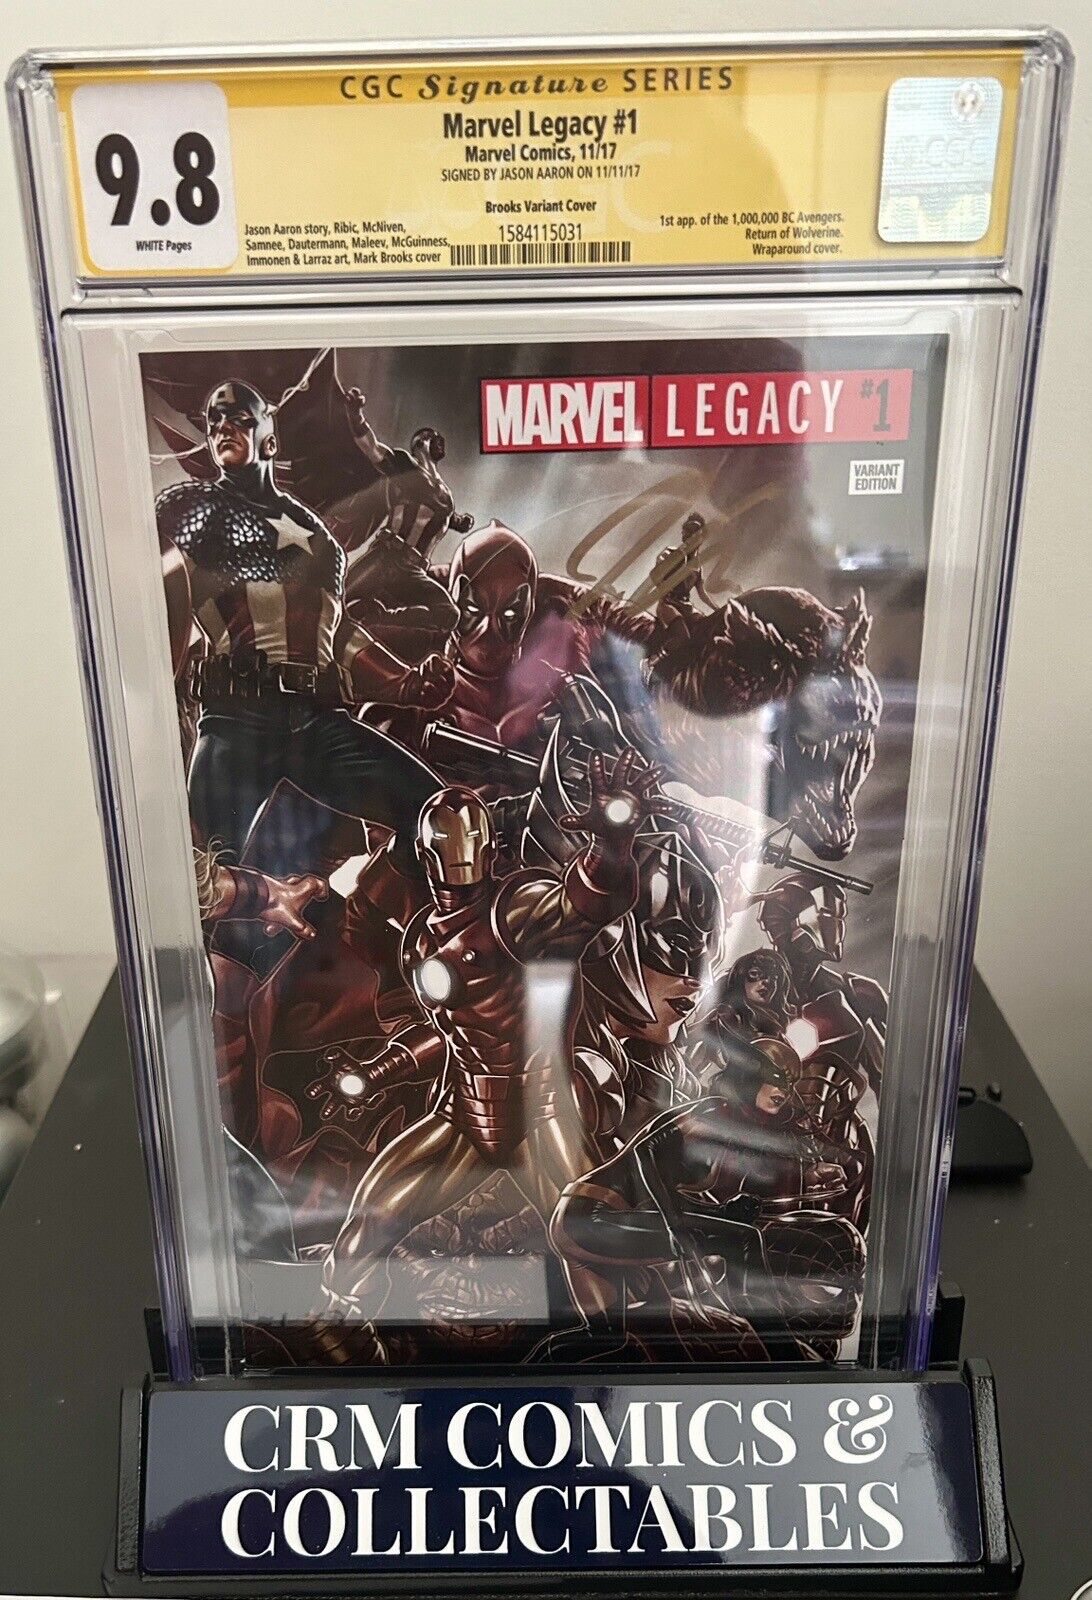 Marvel Legacy #1 Mark Brooks Variant Cover Edition CGC 9.8 SIGNED - Jason Aaron